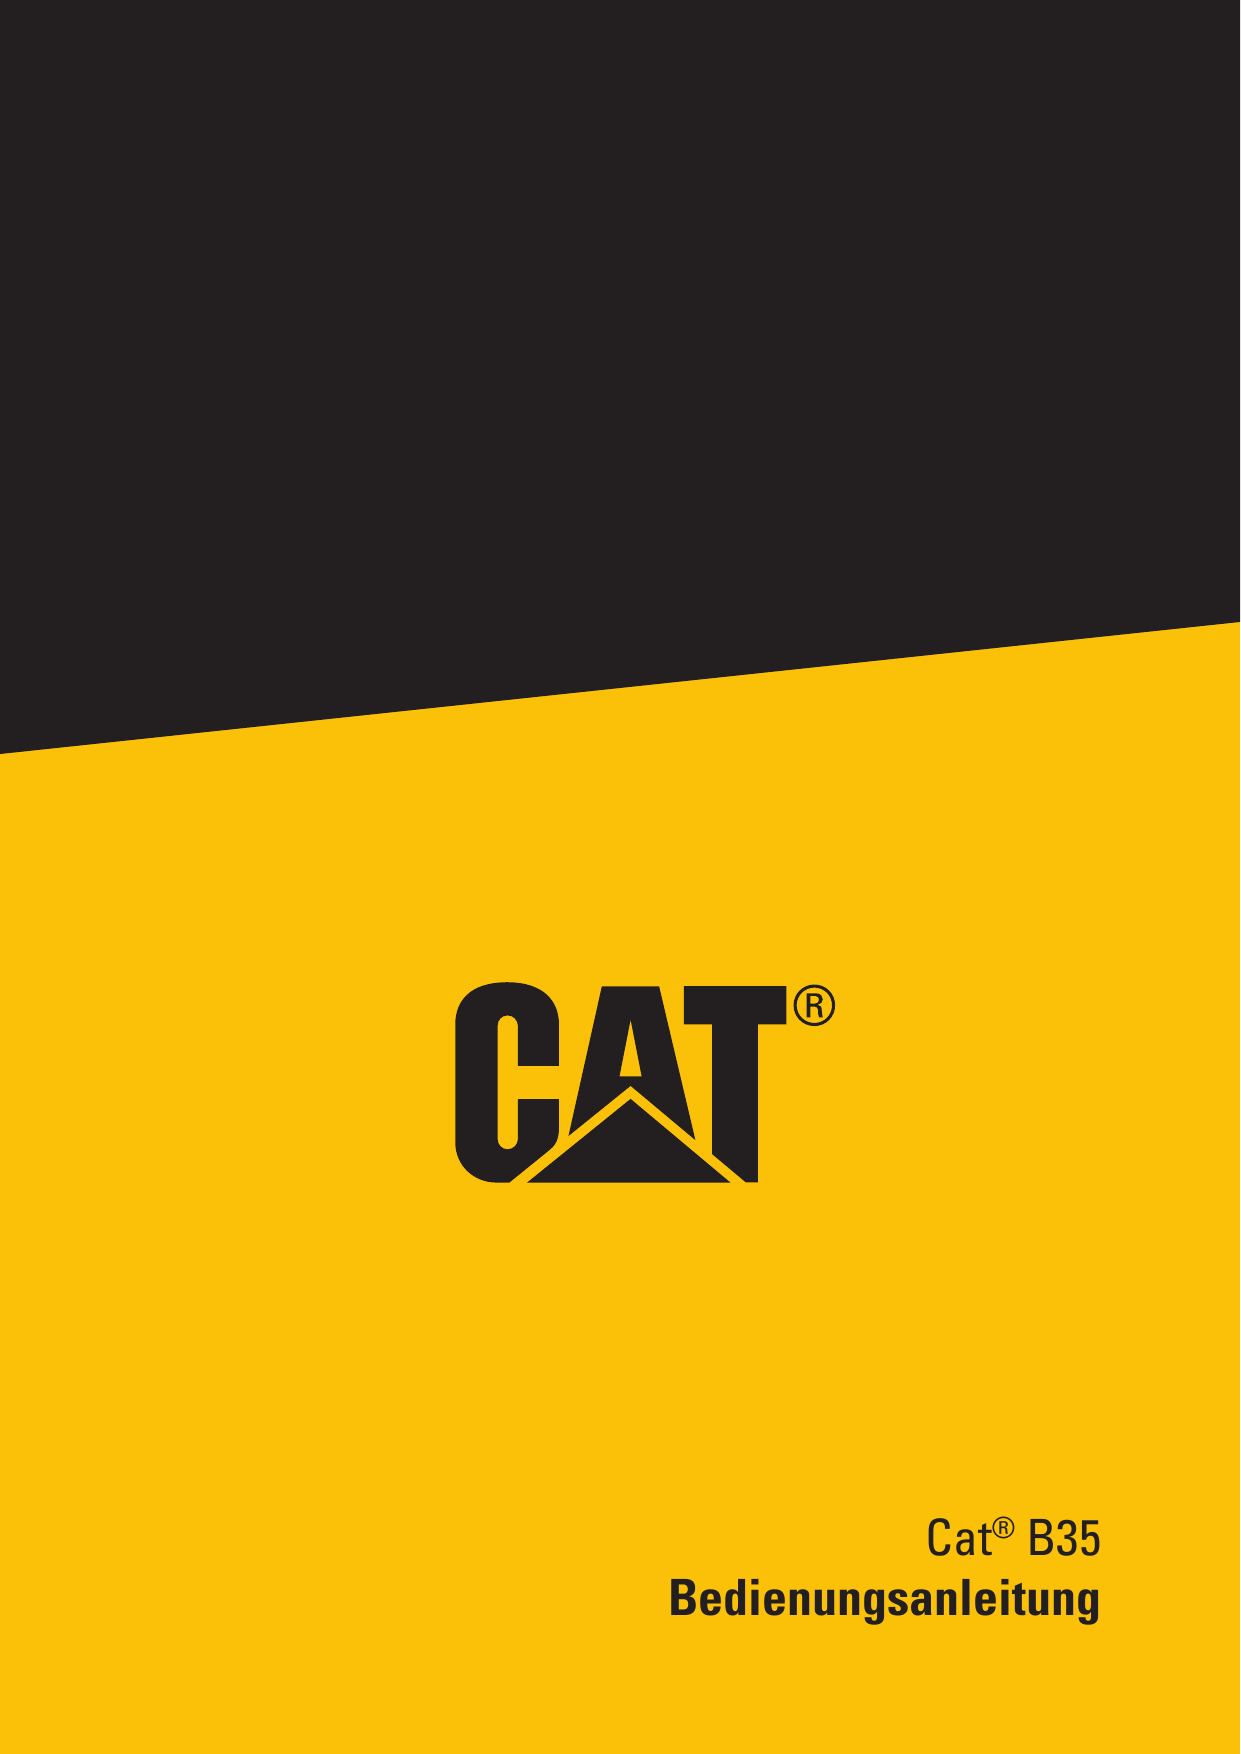 Cat® B35Bedienungsanleitung1